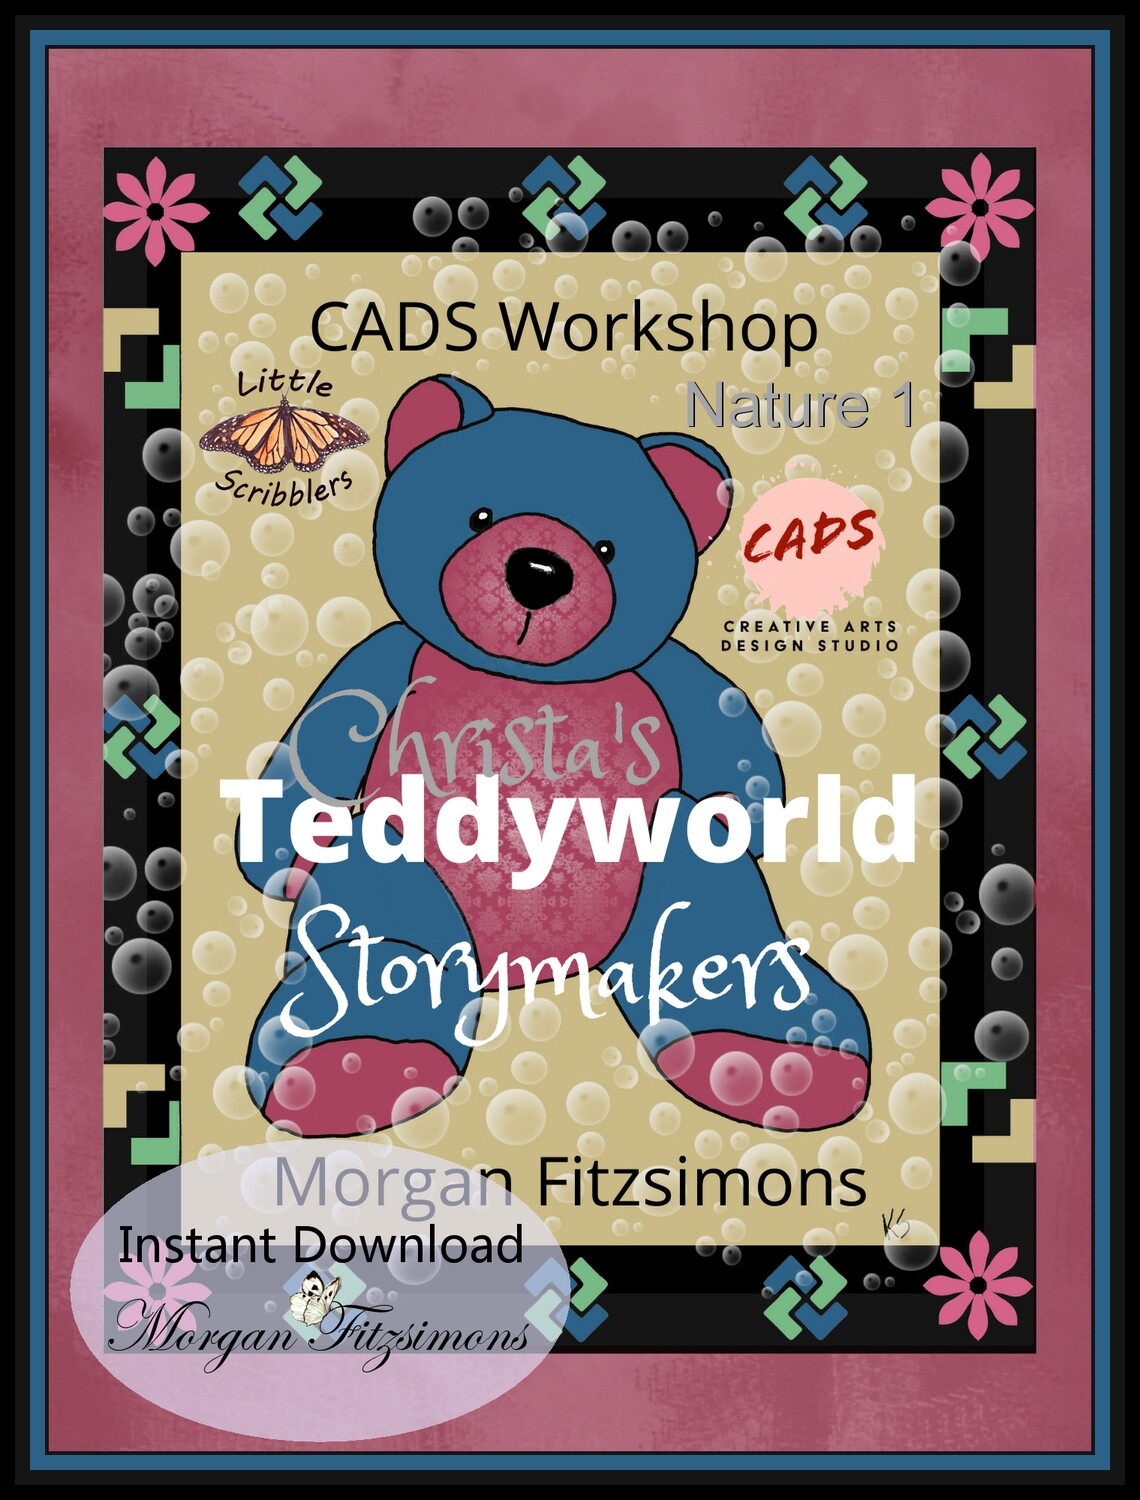 Christa's Teddyworld Storymakers Nature 1